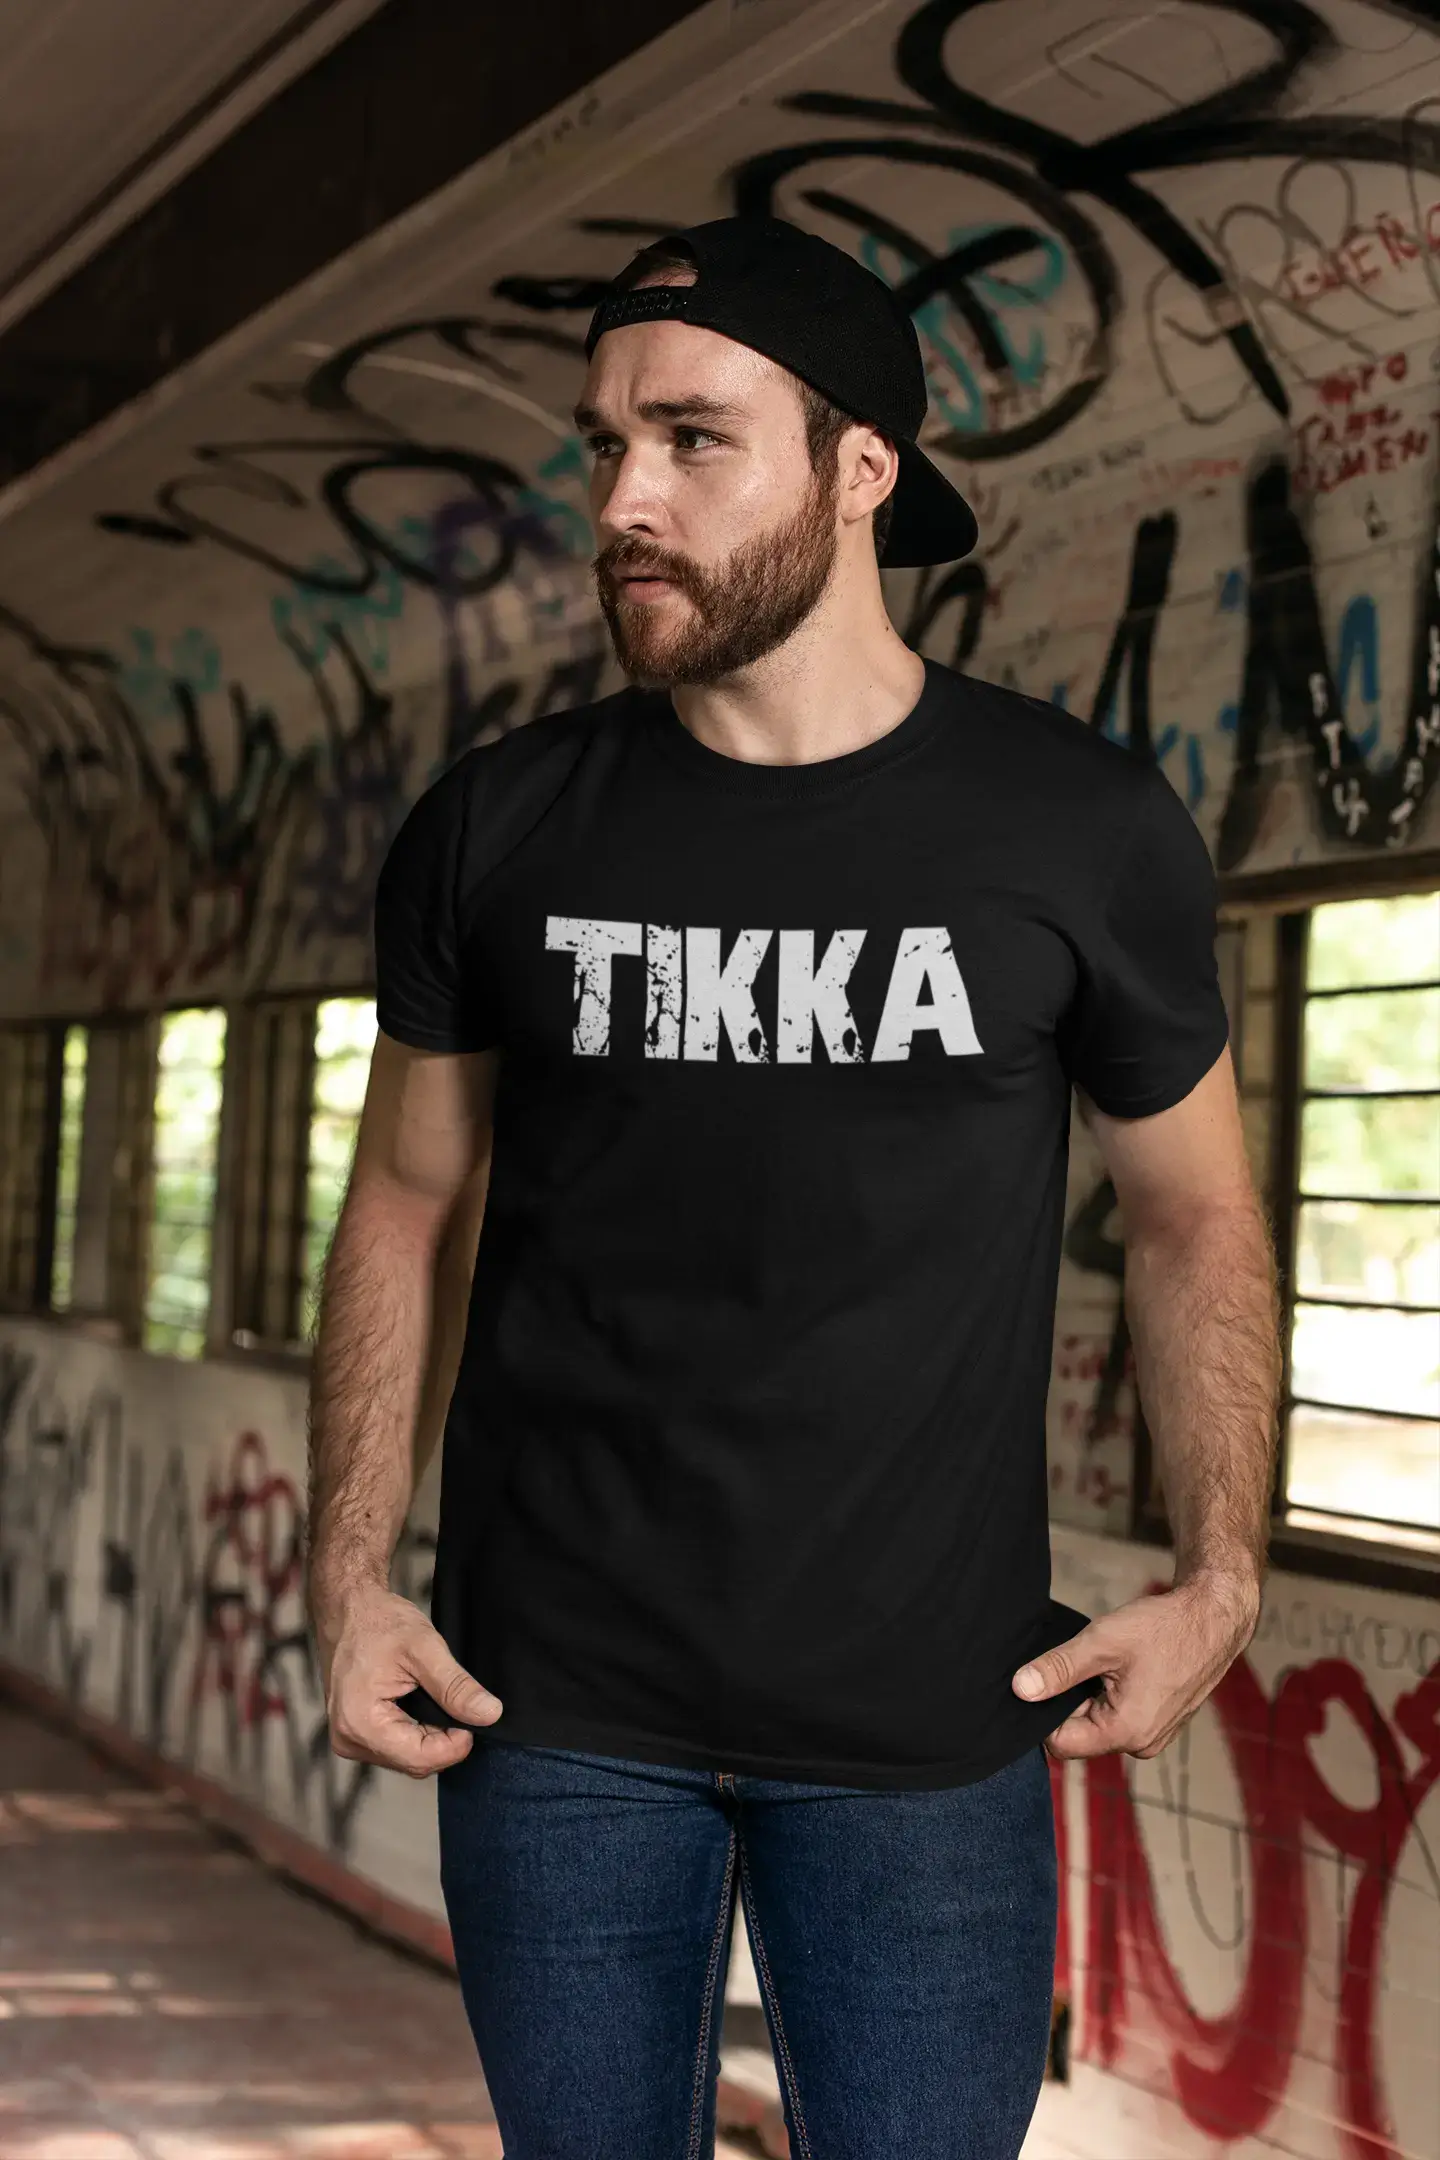 Tikka Herren Retro T-Shirt Schwarz Geburtstagsgeschenk 00553